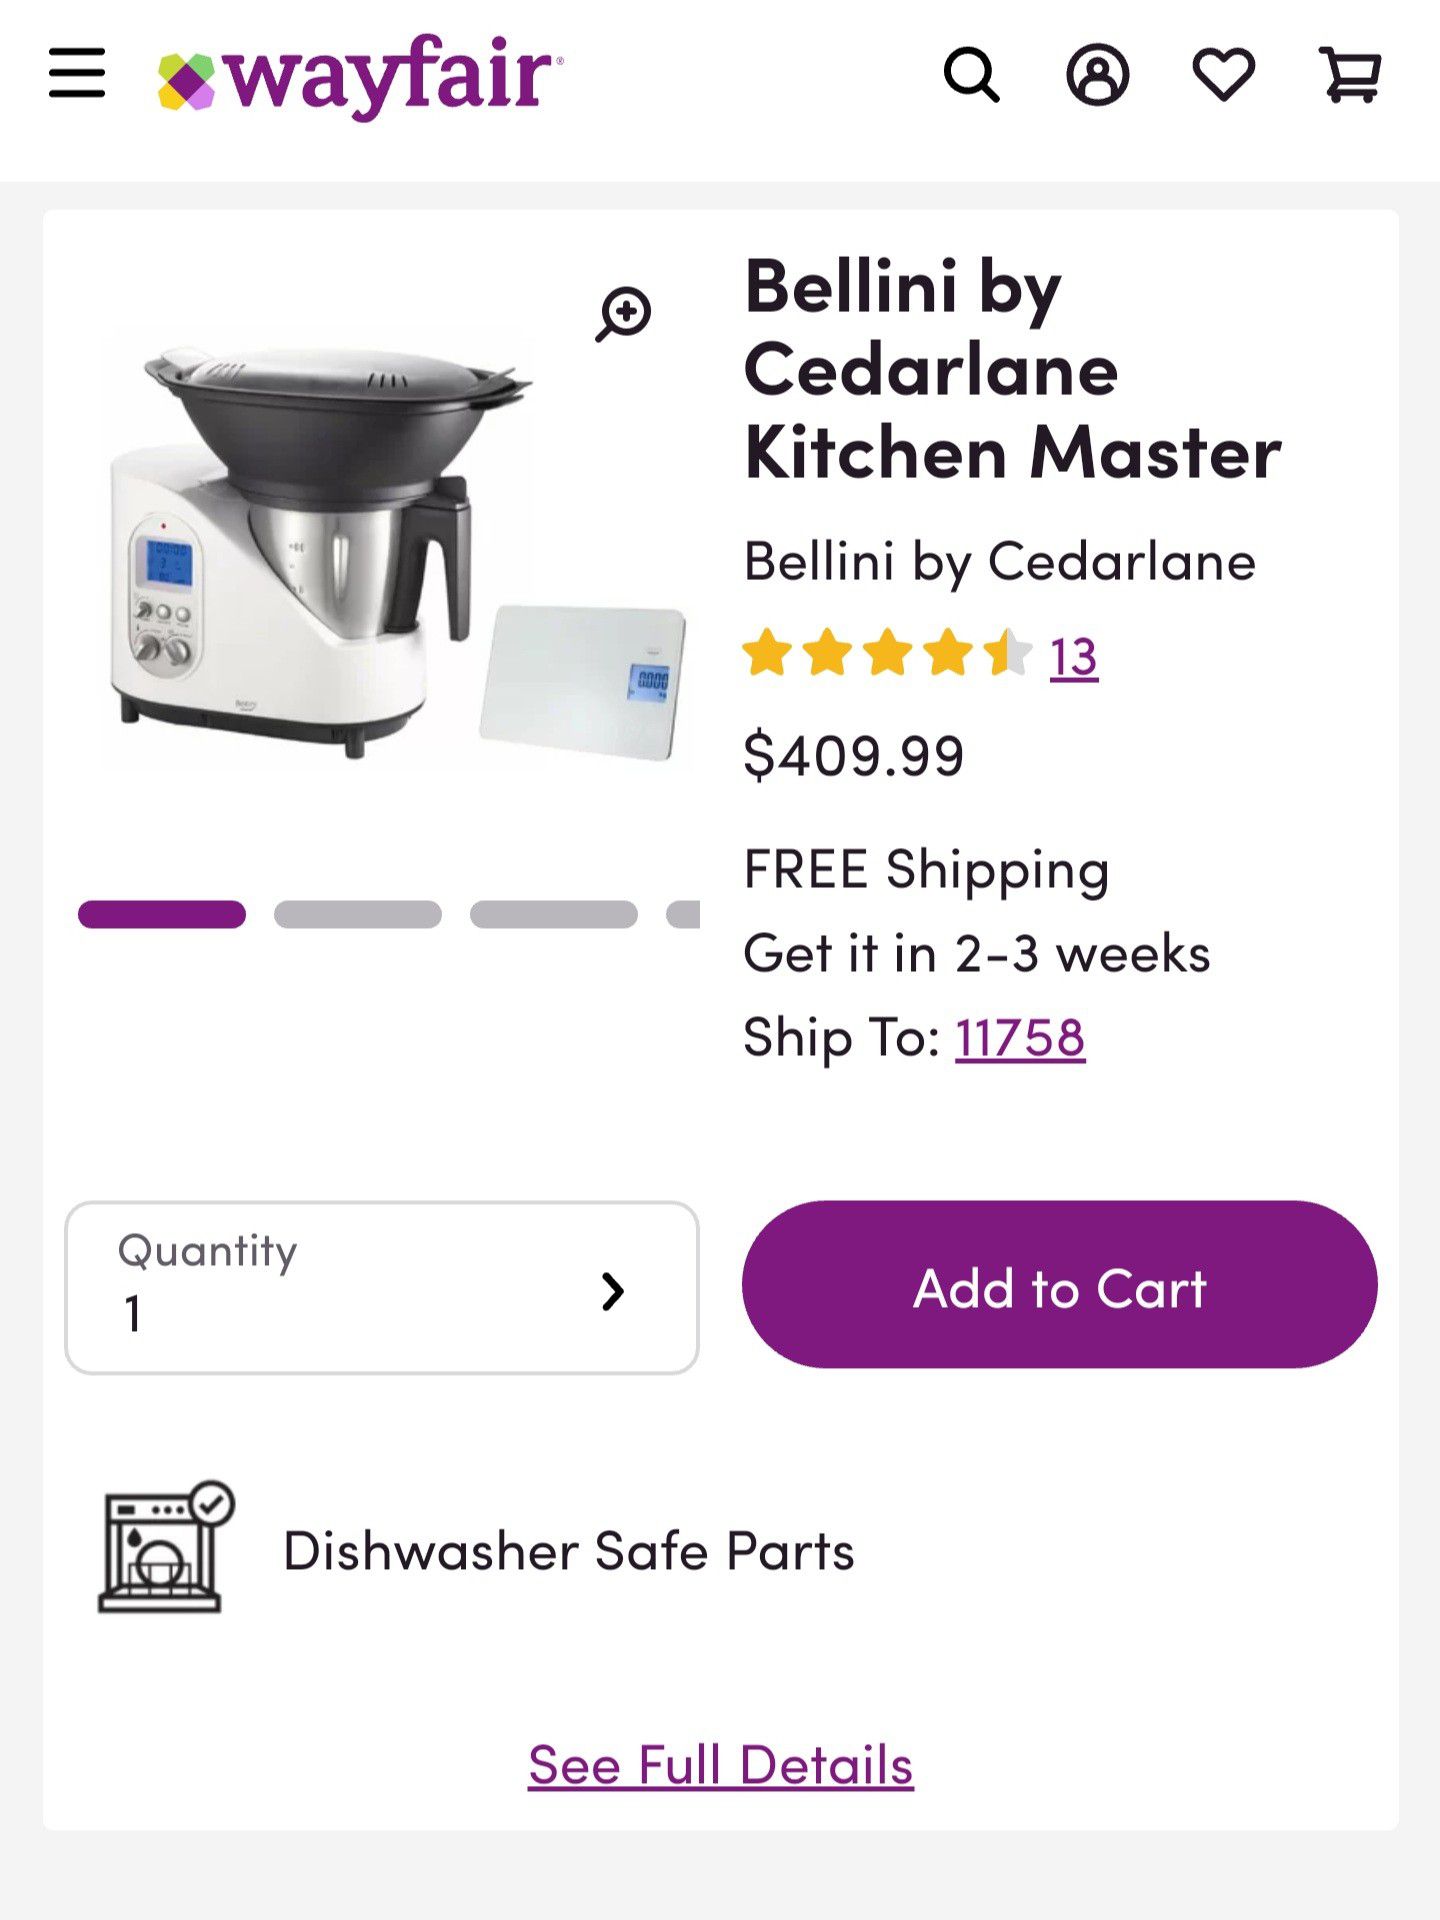 Bellini Kitchen Master by Cedarlane